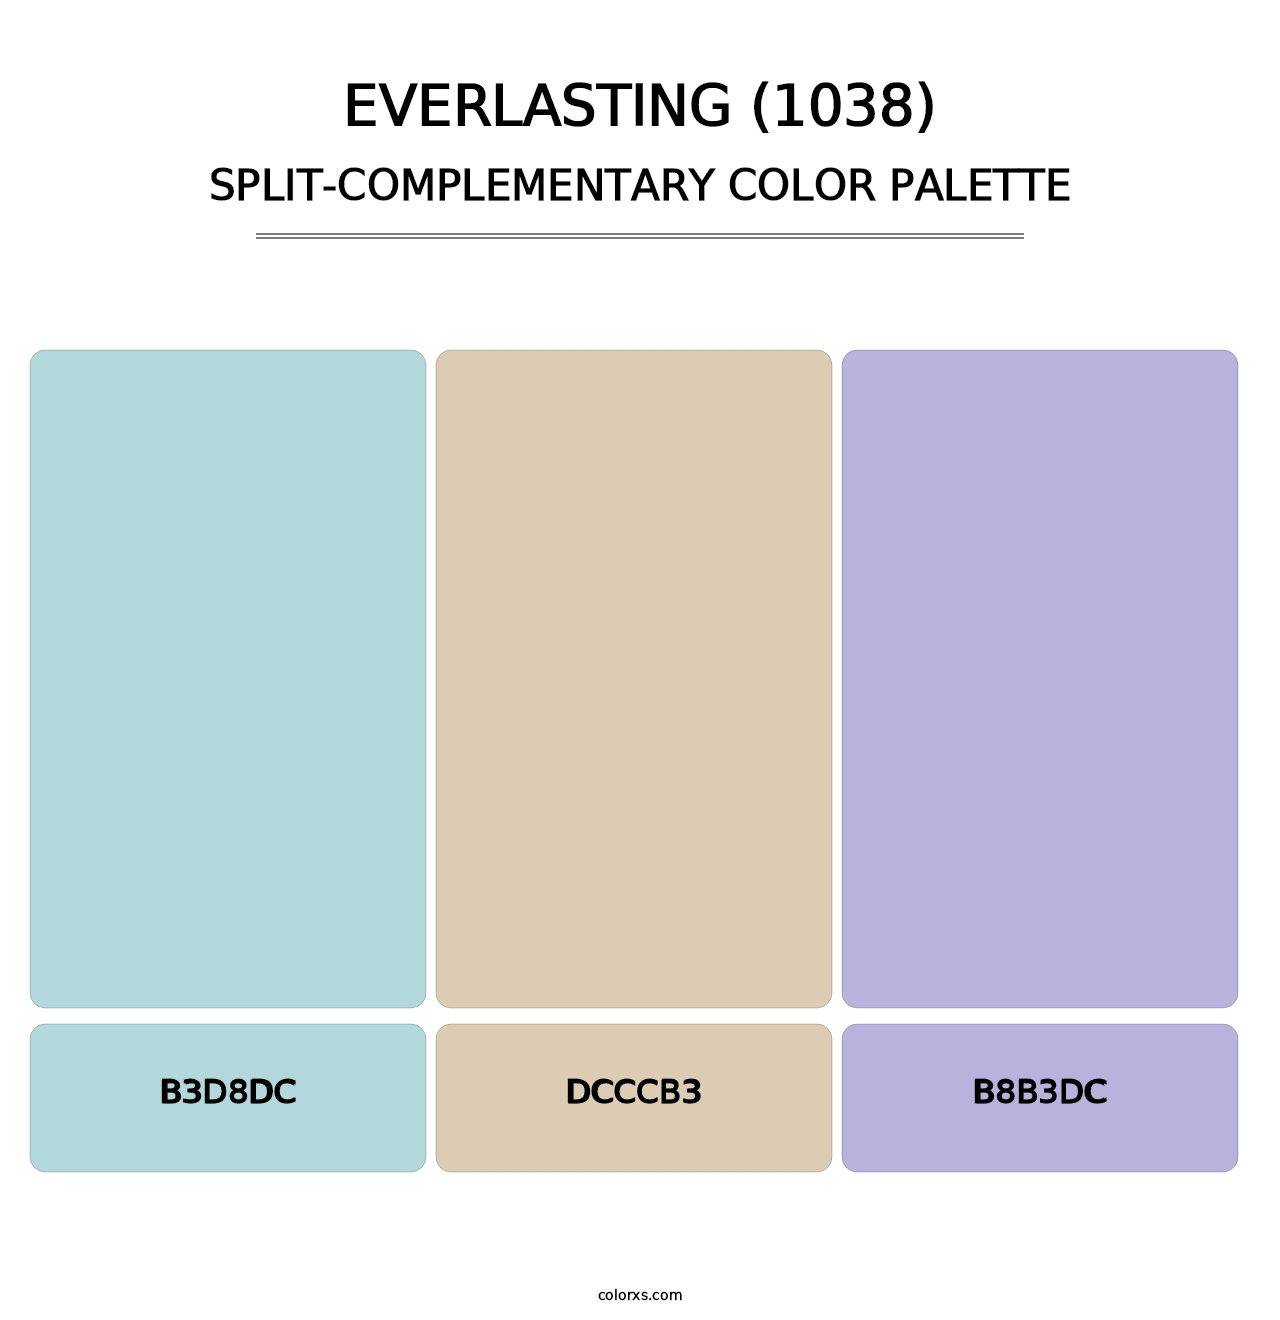 Everlasting (1038) - Split-Complementary Color Palette